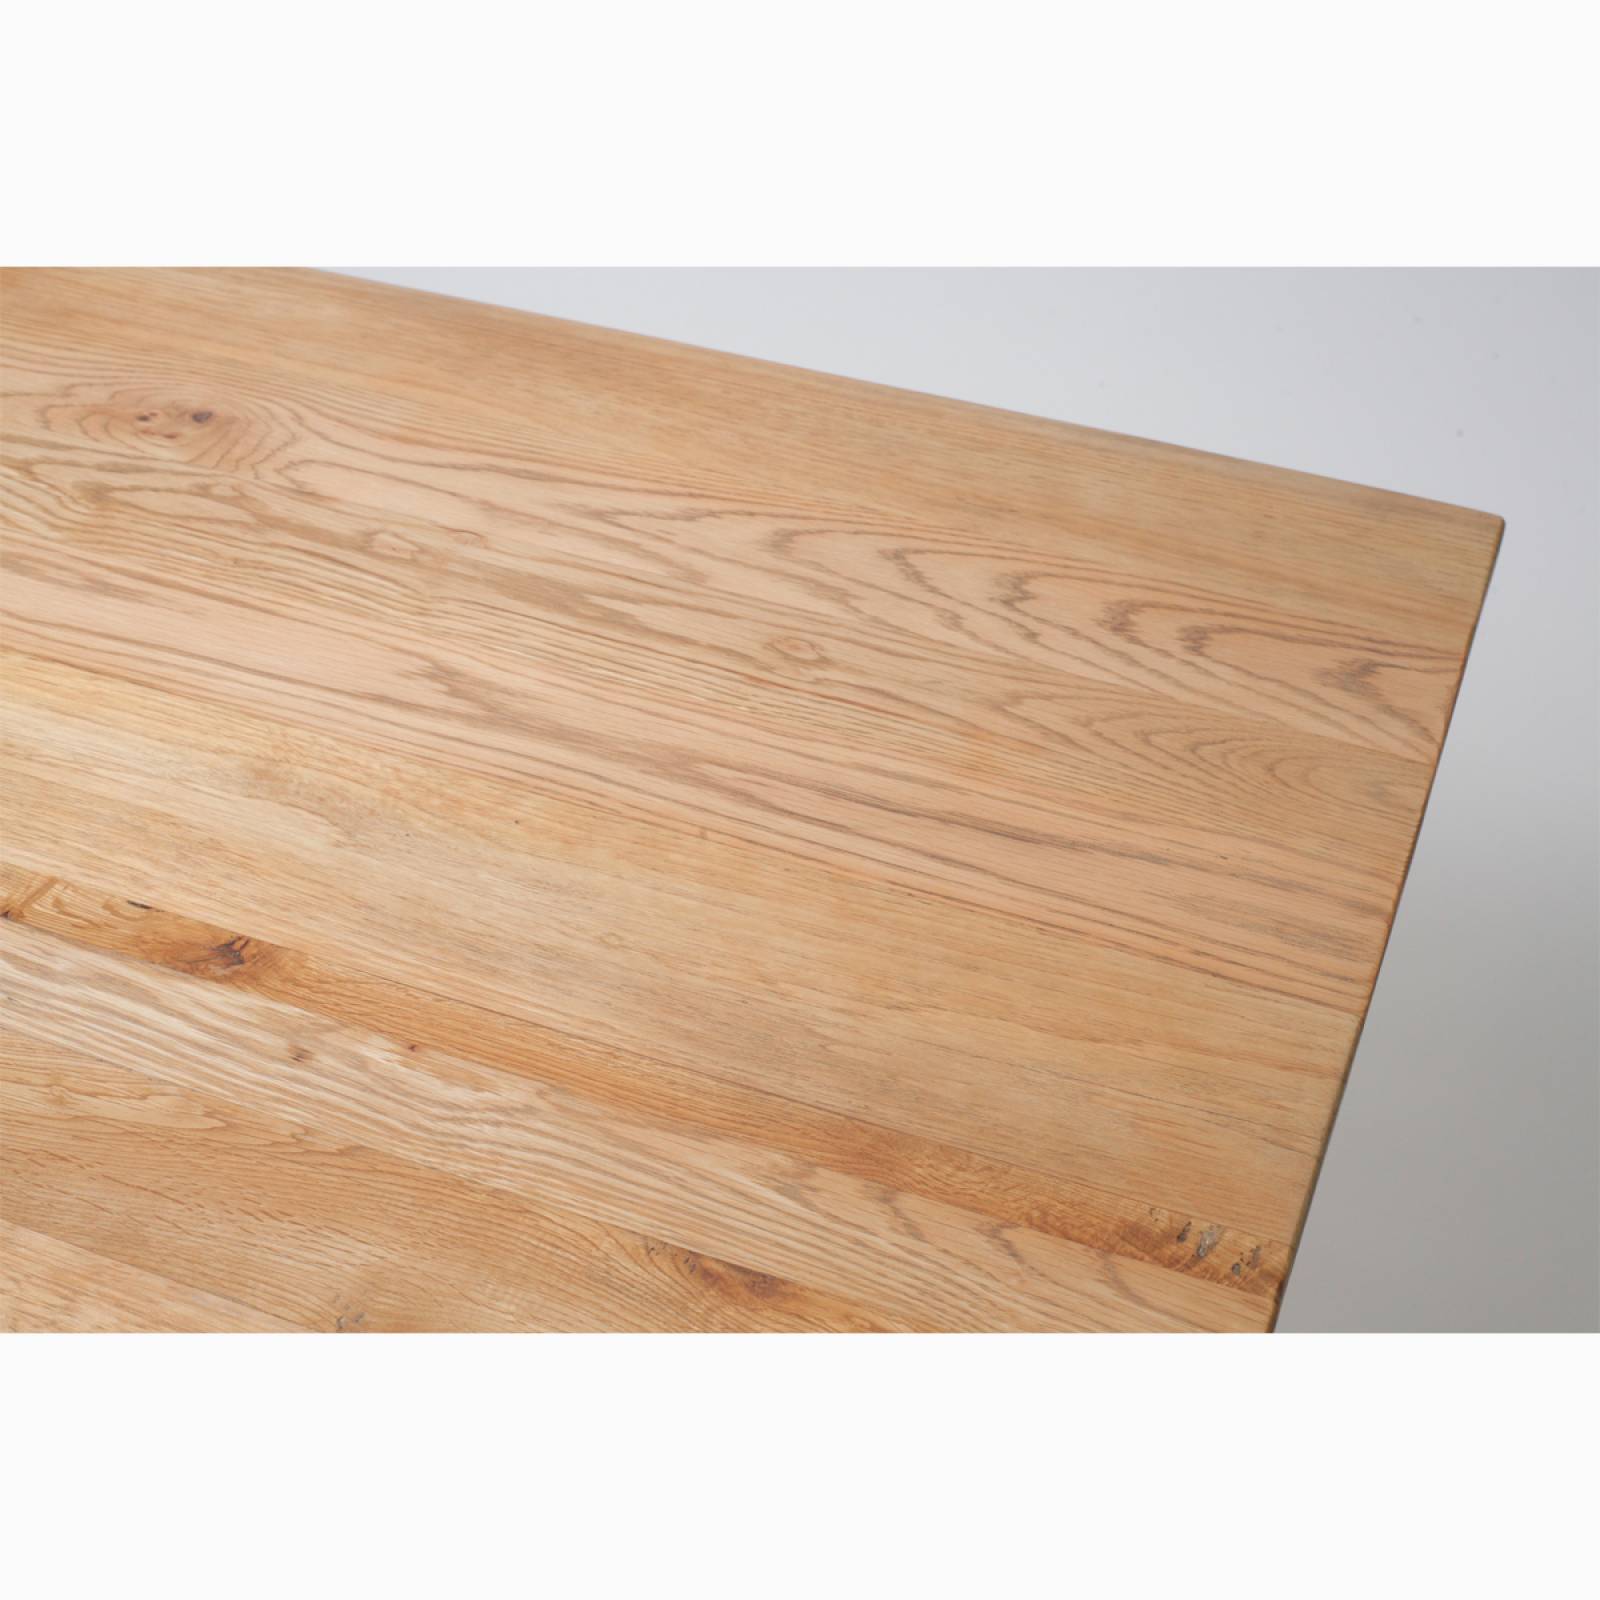 Gotland 1.5m Rectangular Oak Retro Dining Table Splayed Legs thumbnails